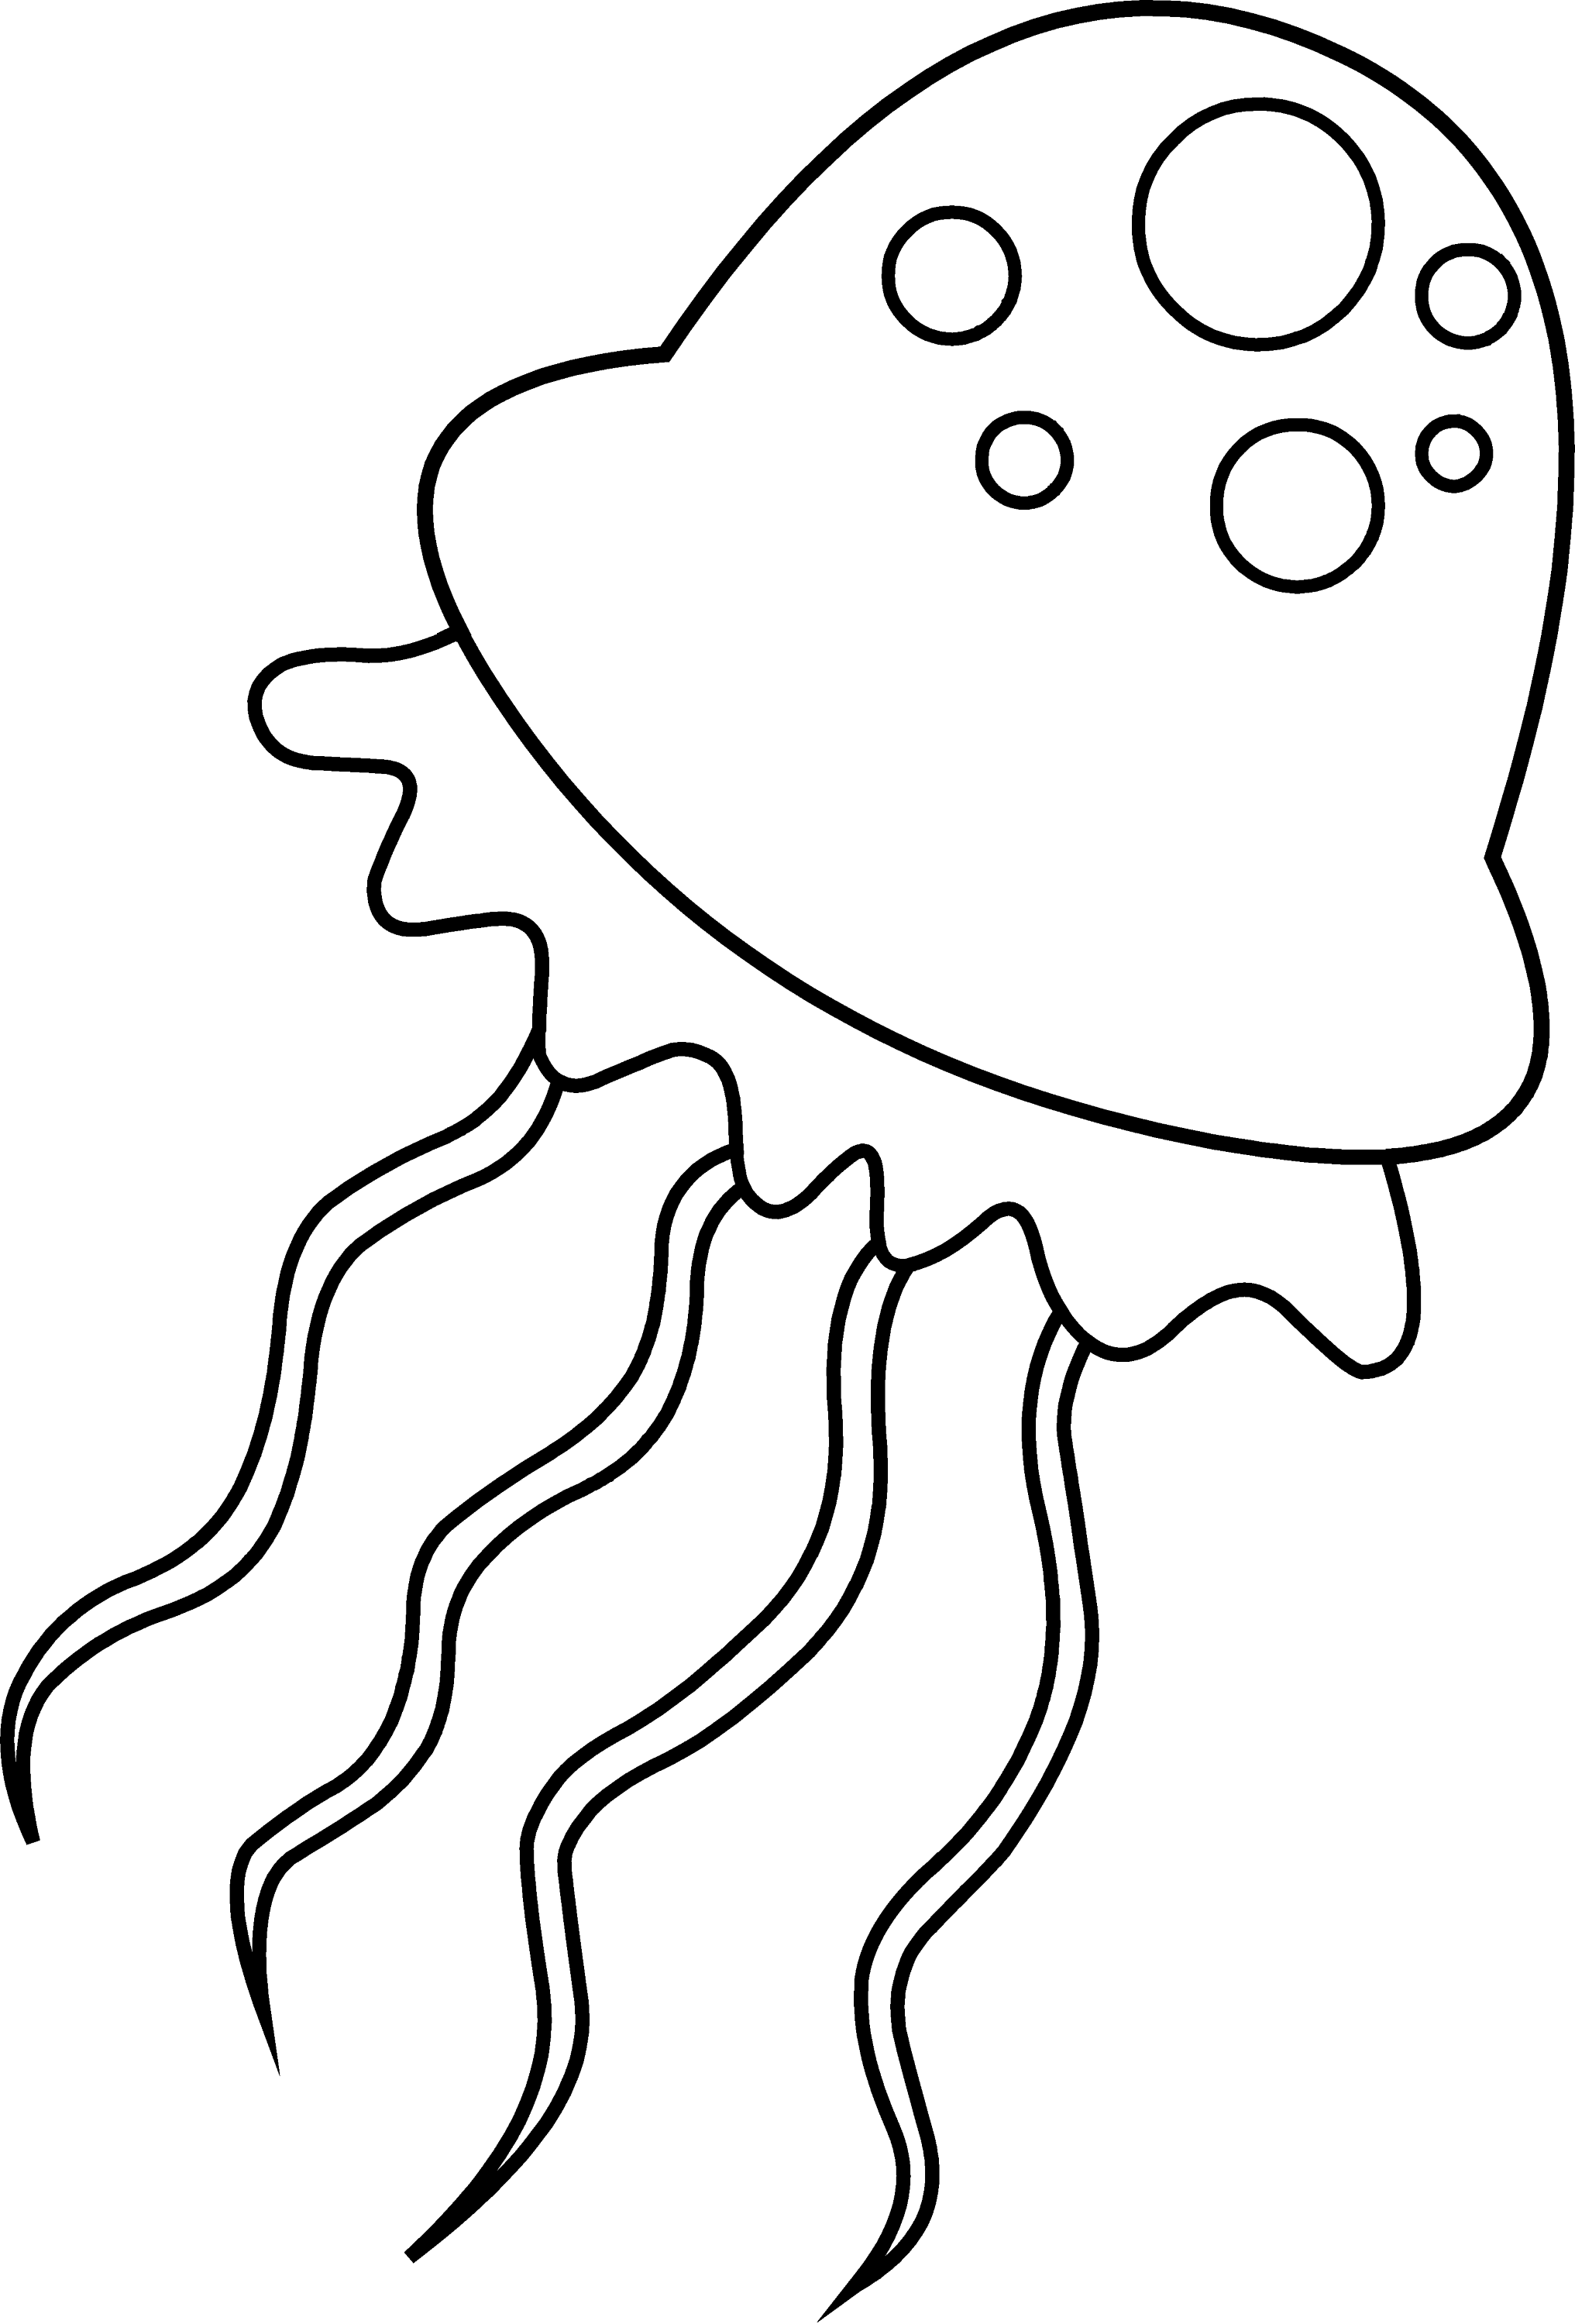 jellyfish clipart black and white - photo #4